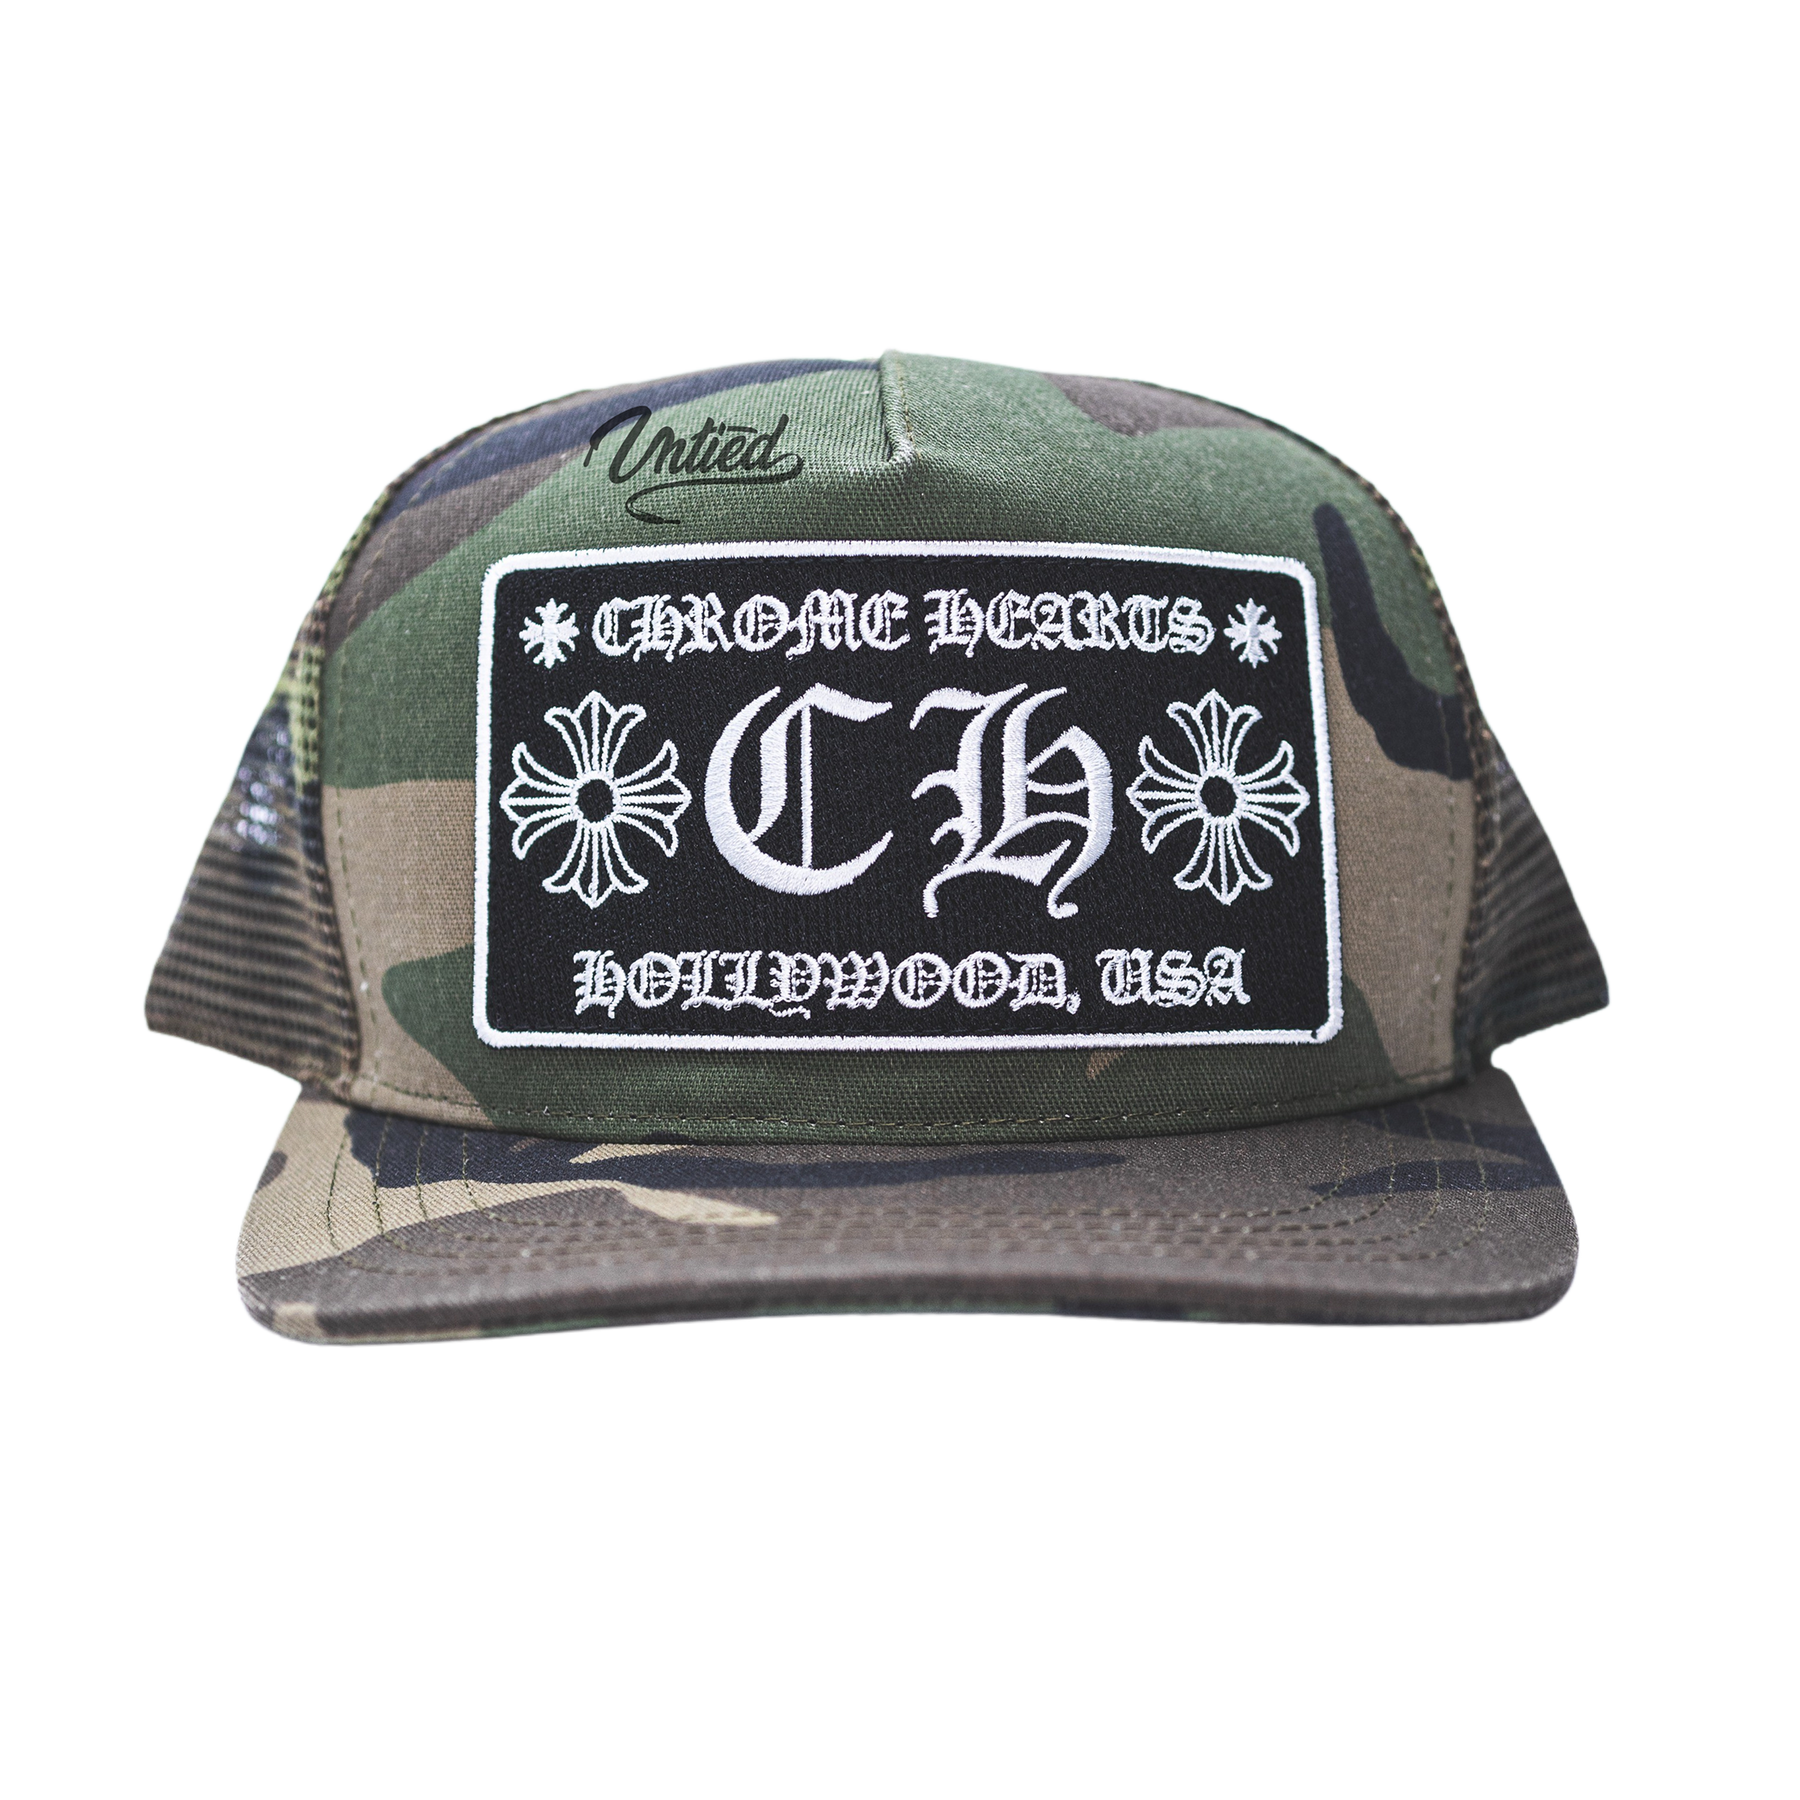 Chrome Hearts Trucker Hat "Camo"